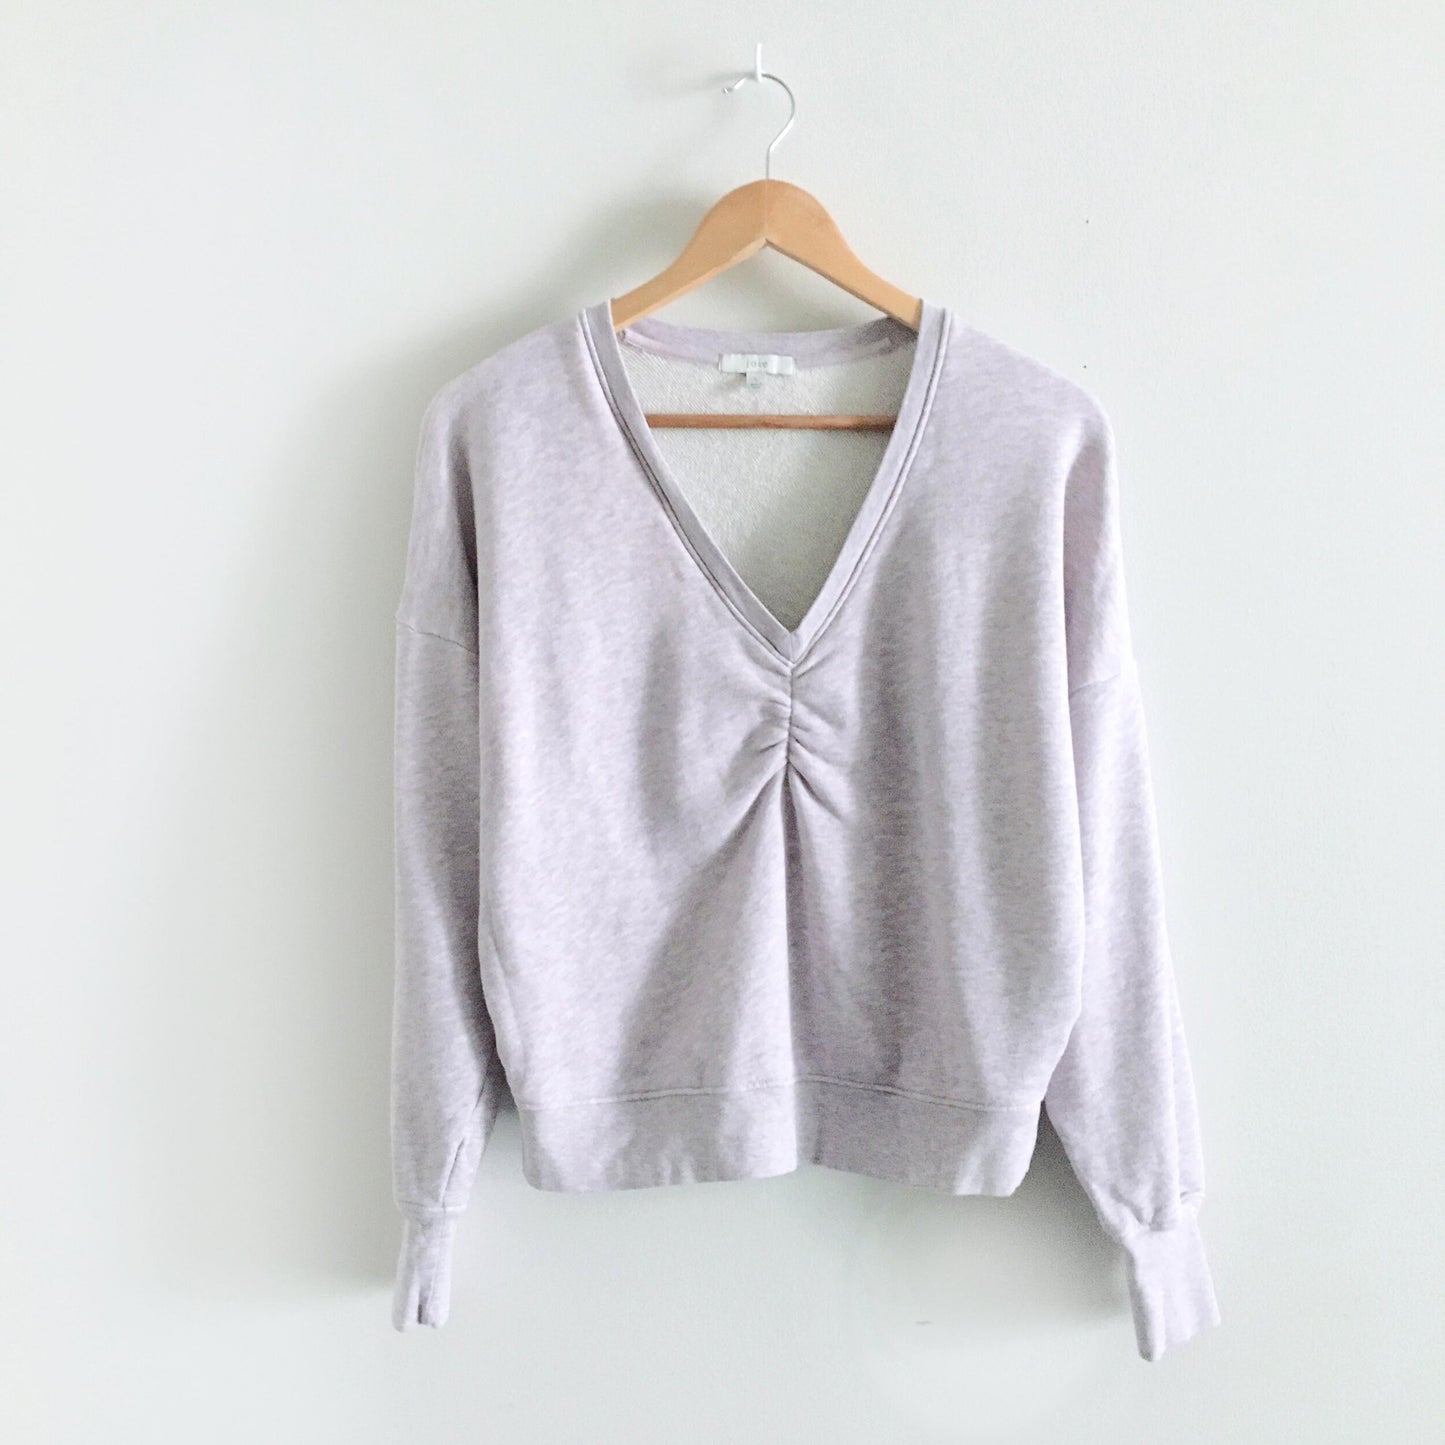 Joie Warda Ruched Sweatshirt - size Small